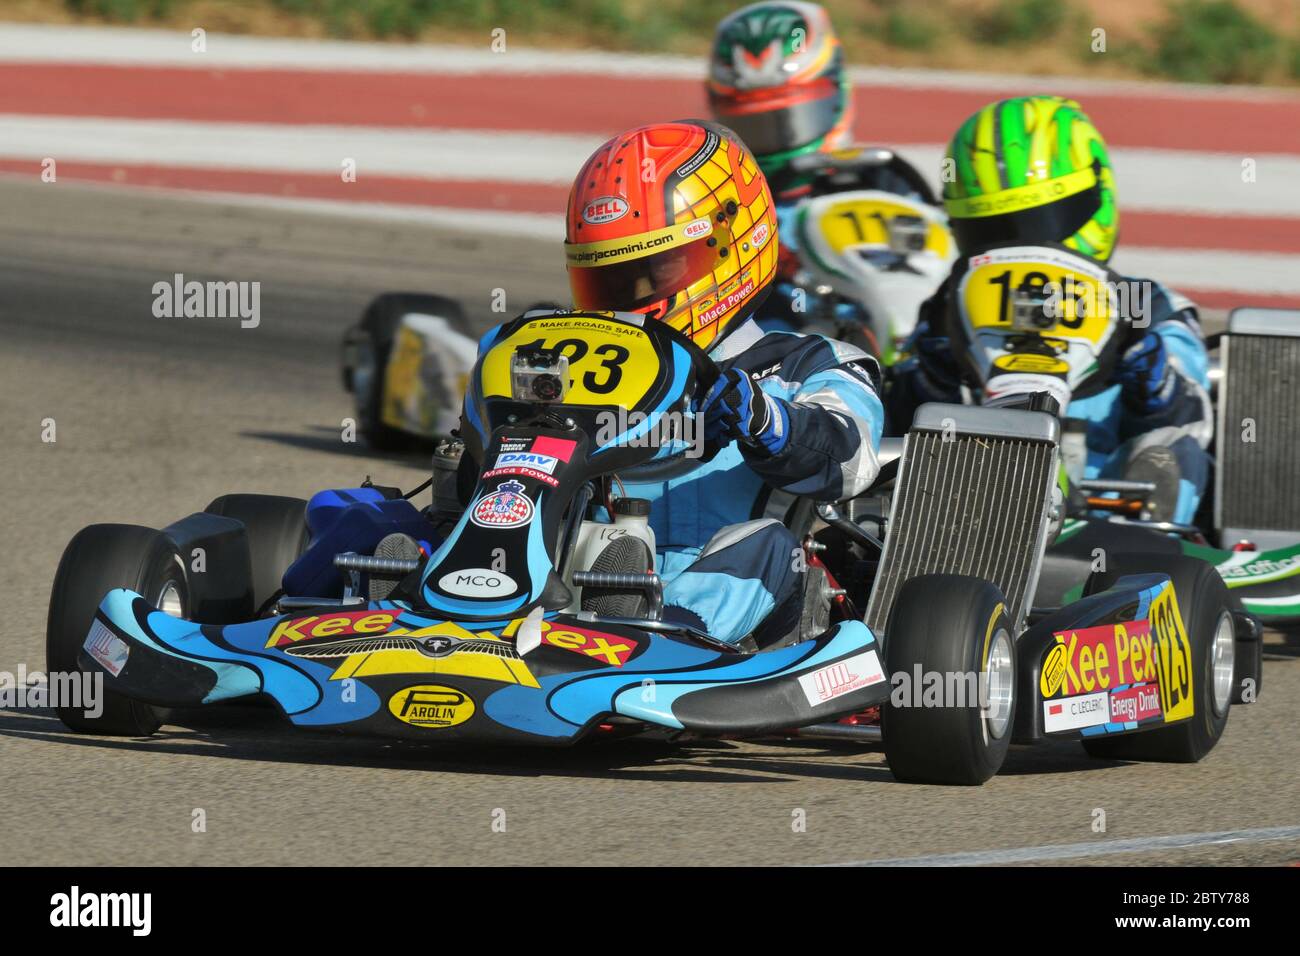 Charles Leclerc karting career Stock Photo - Alamy